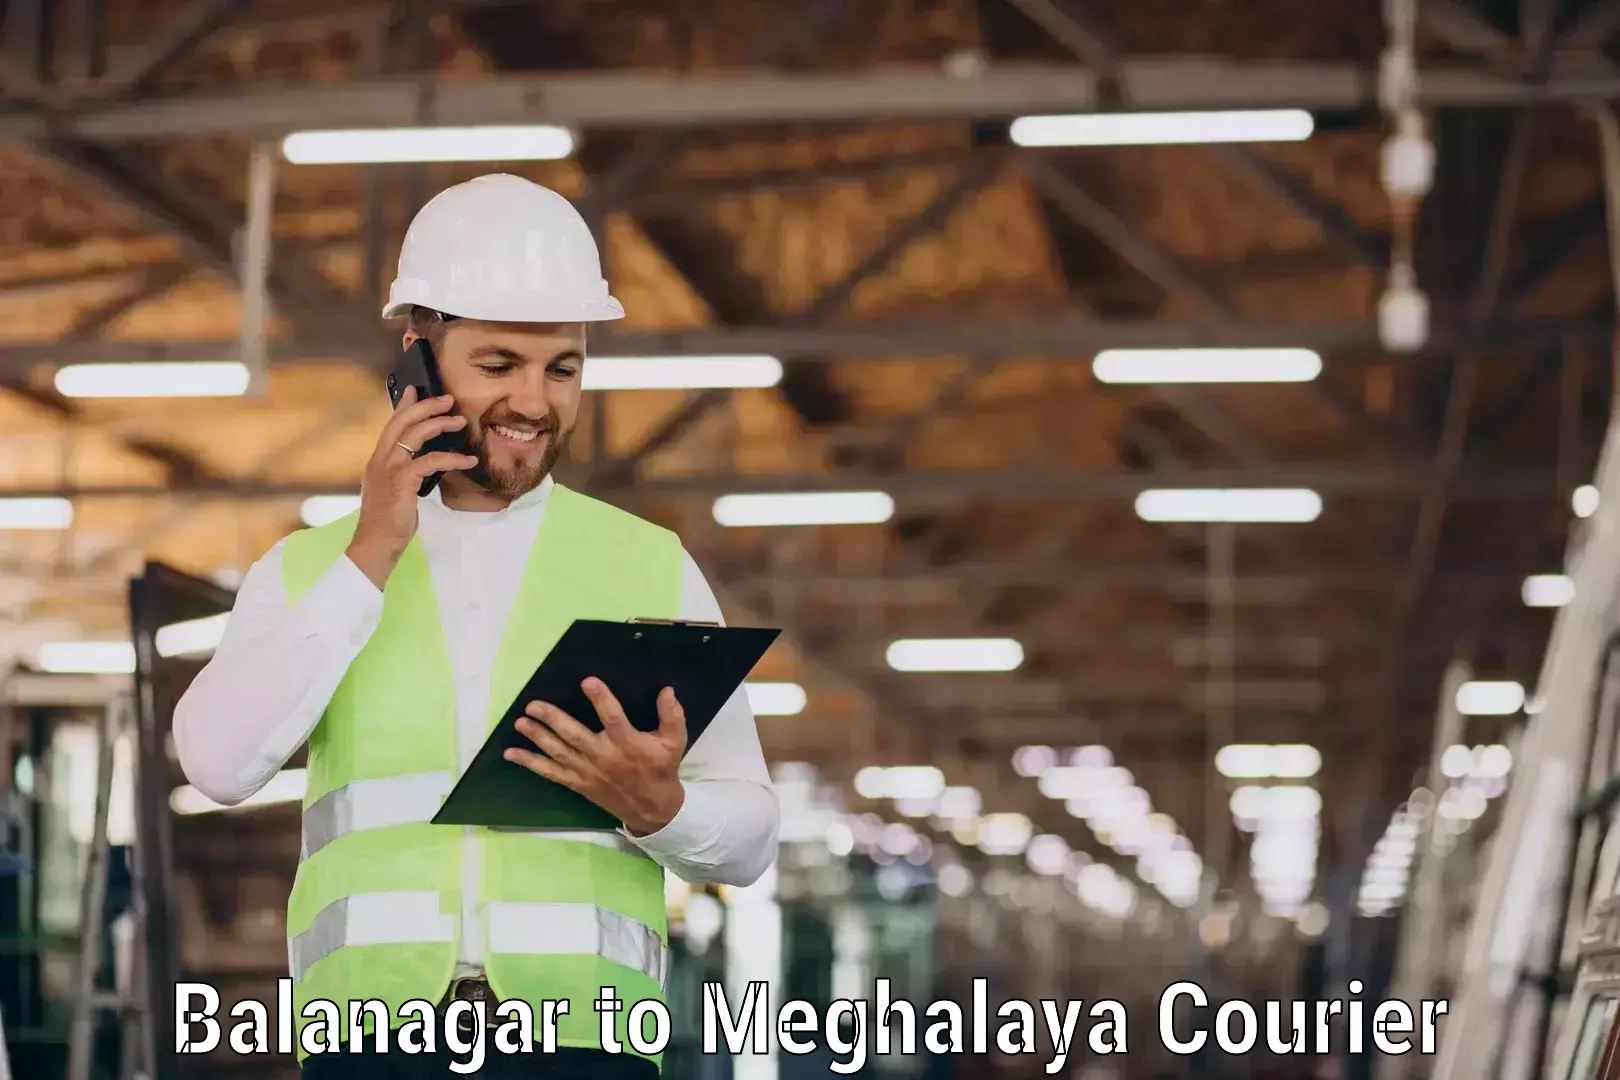 High-speed parcel service Balanagar to Meghalaya